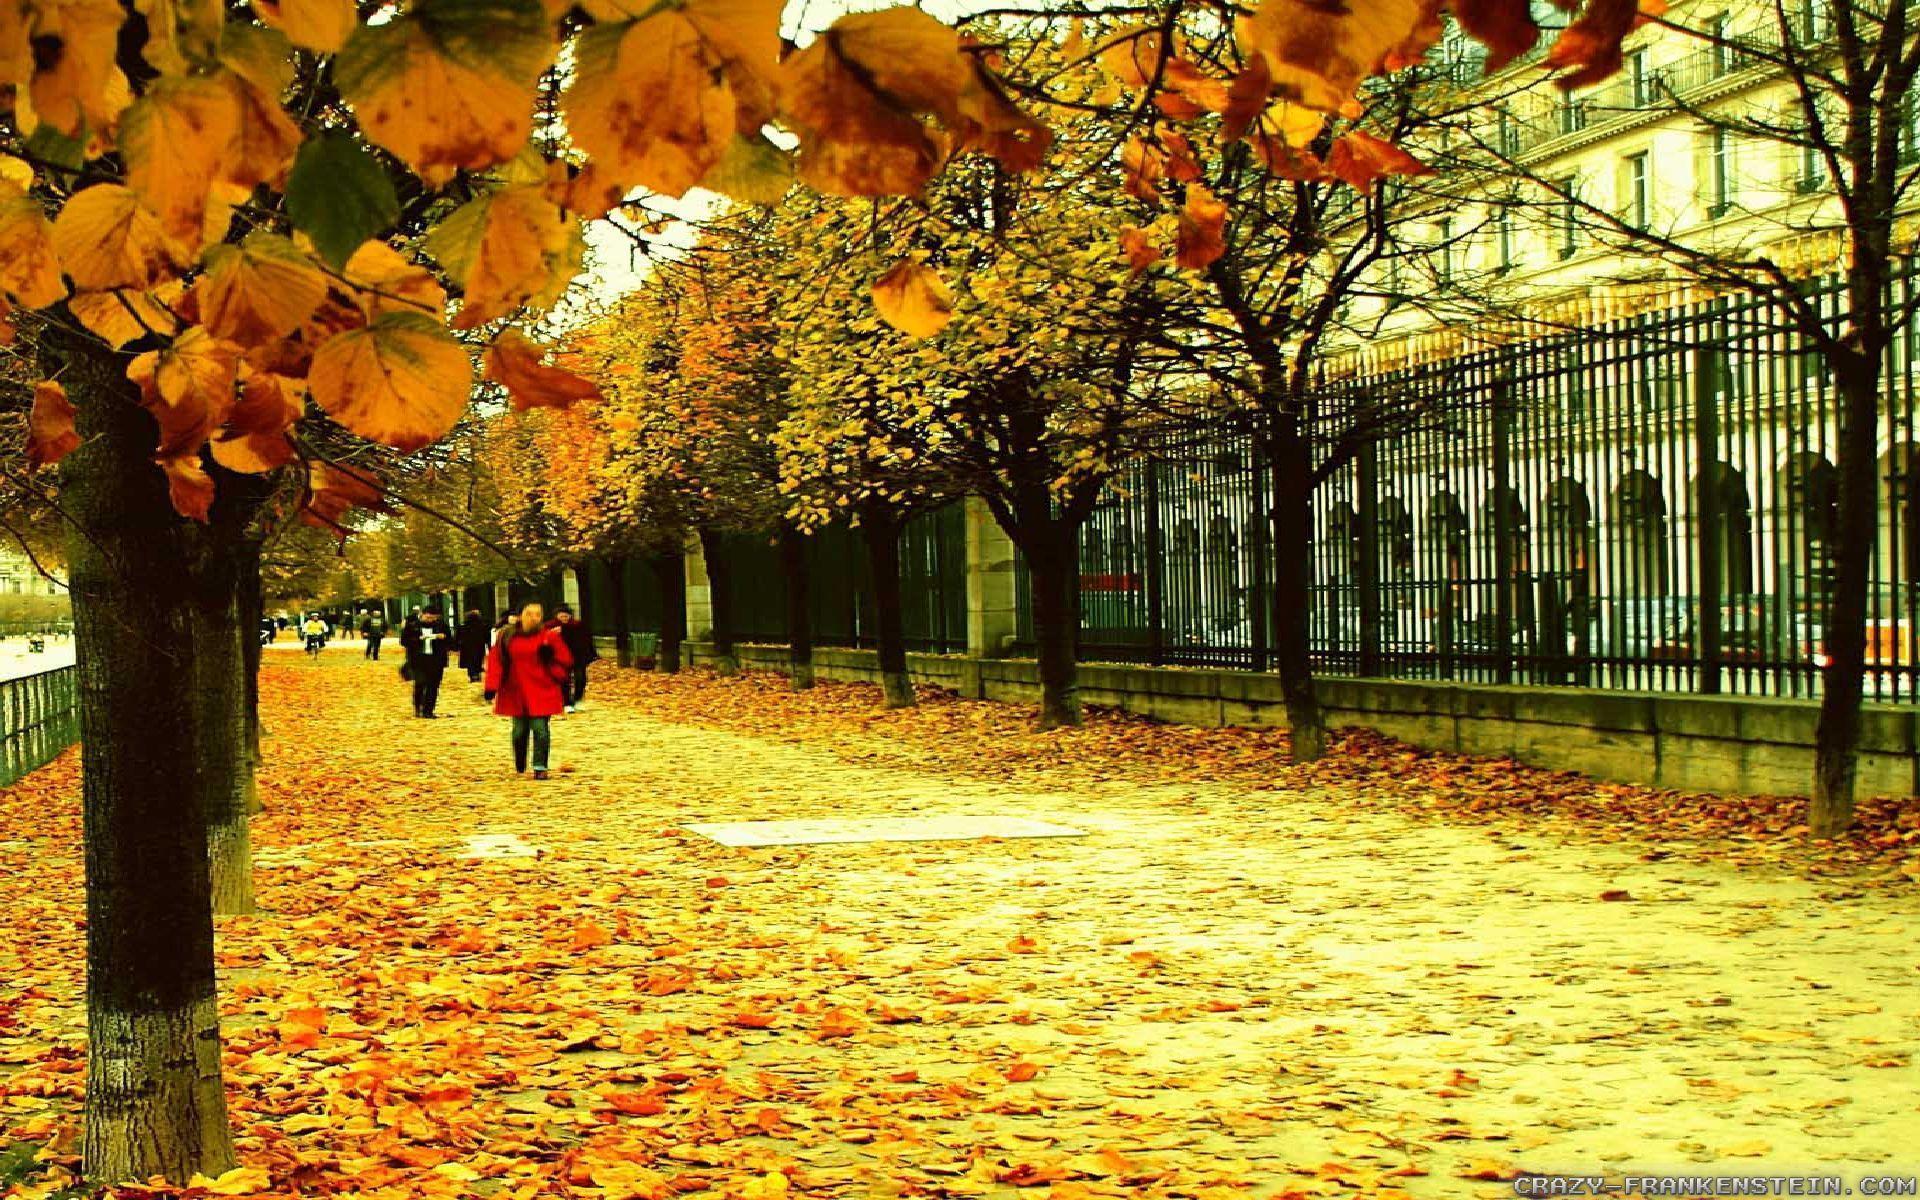 Autumn In France wallpaper